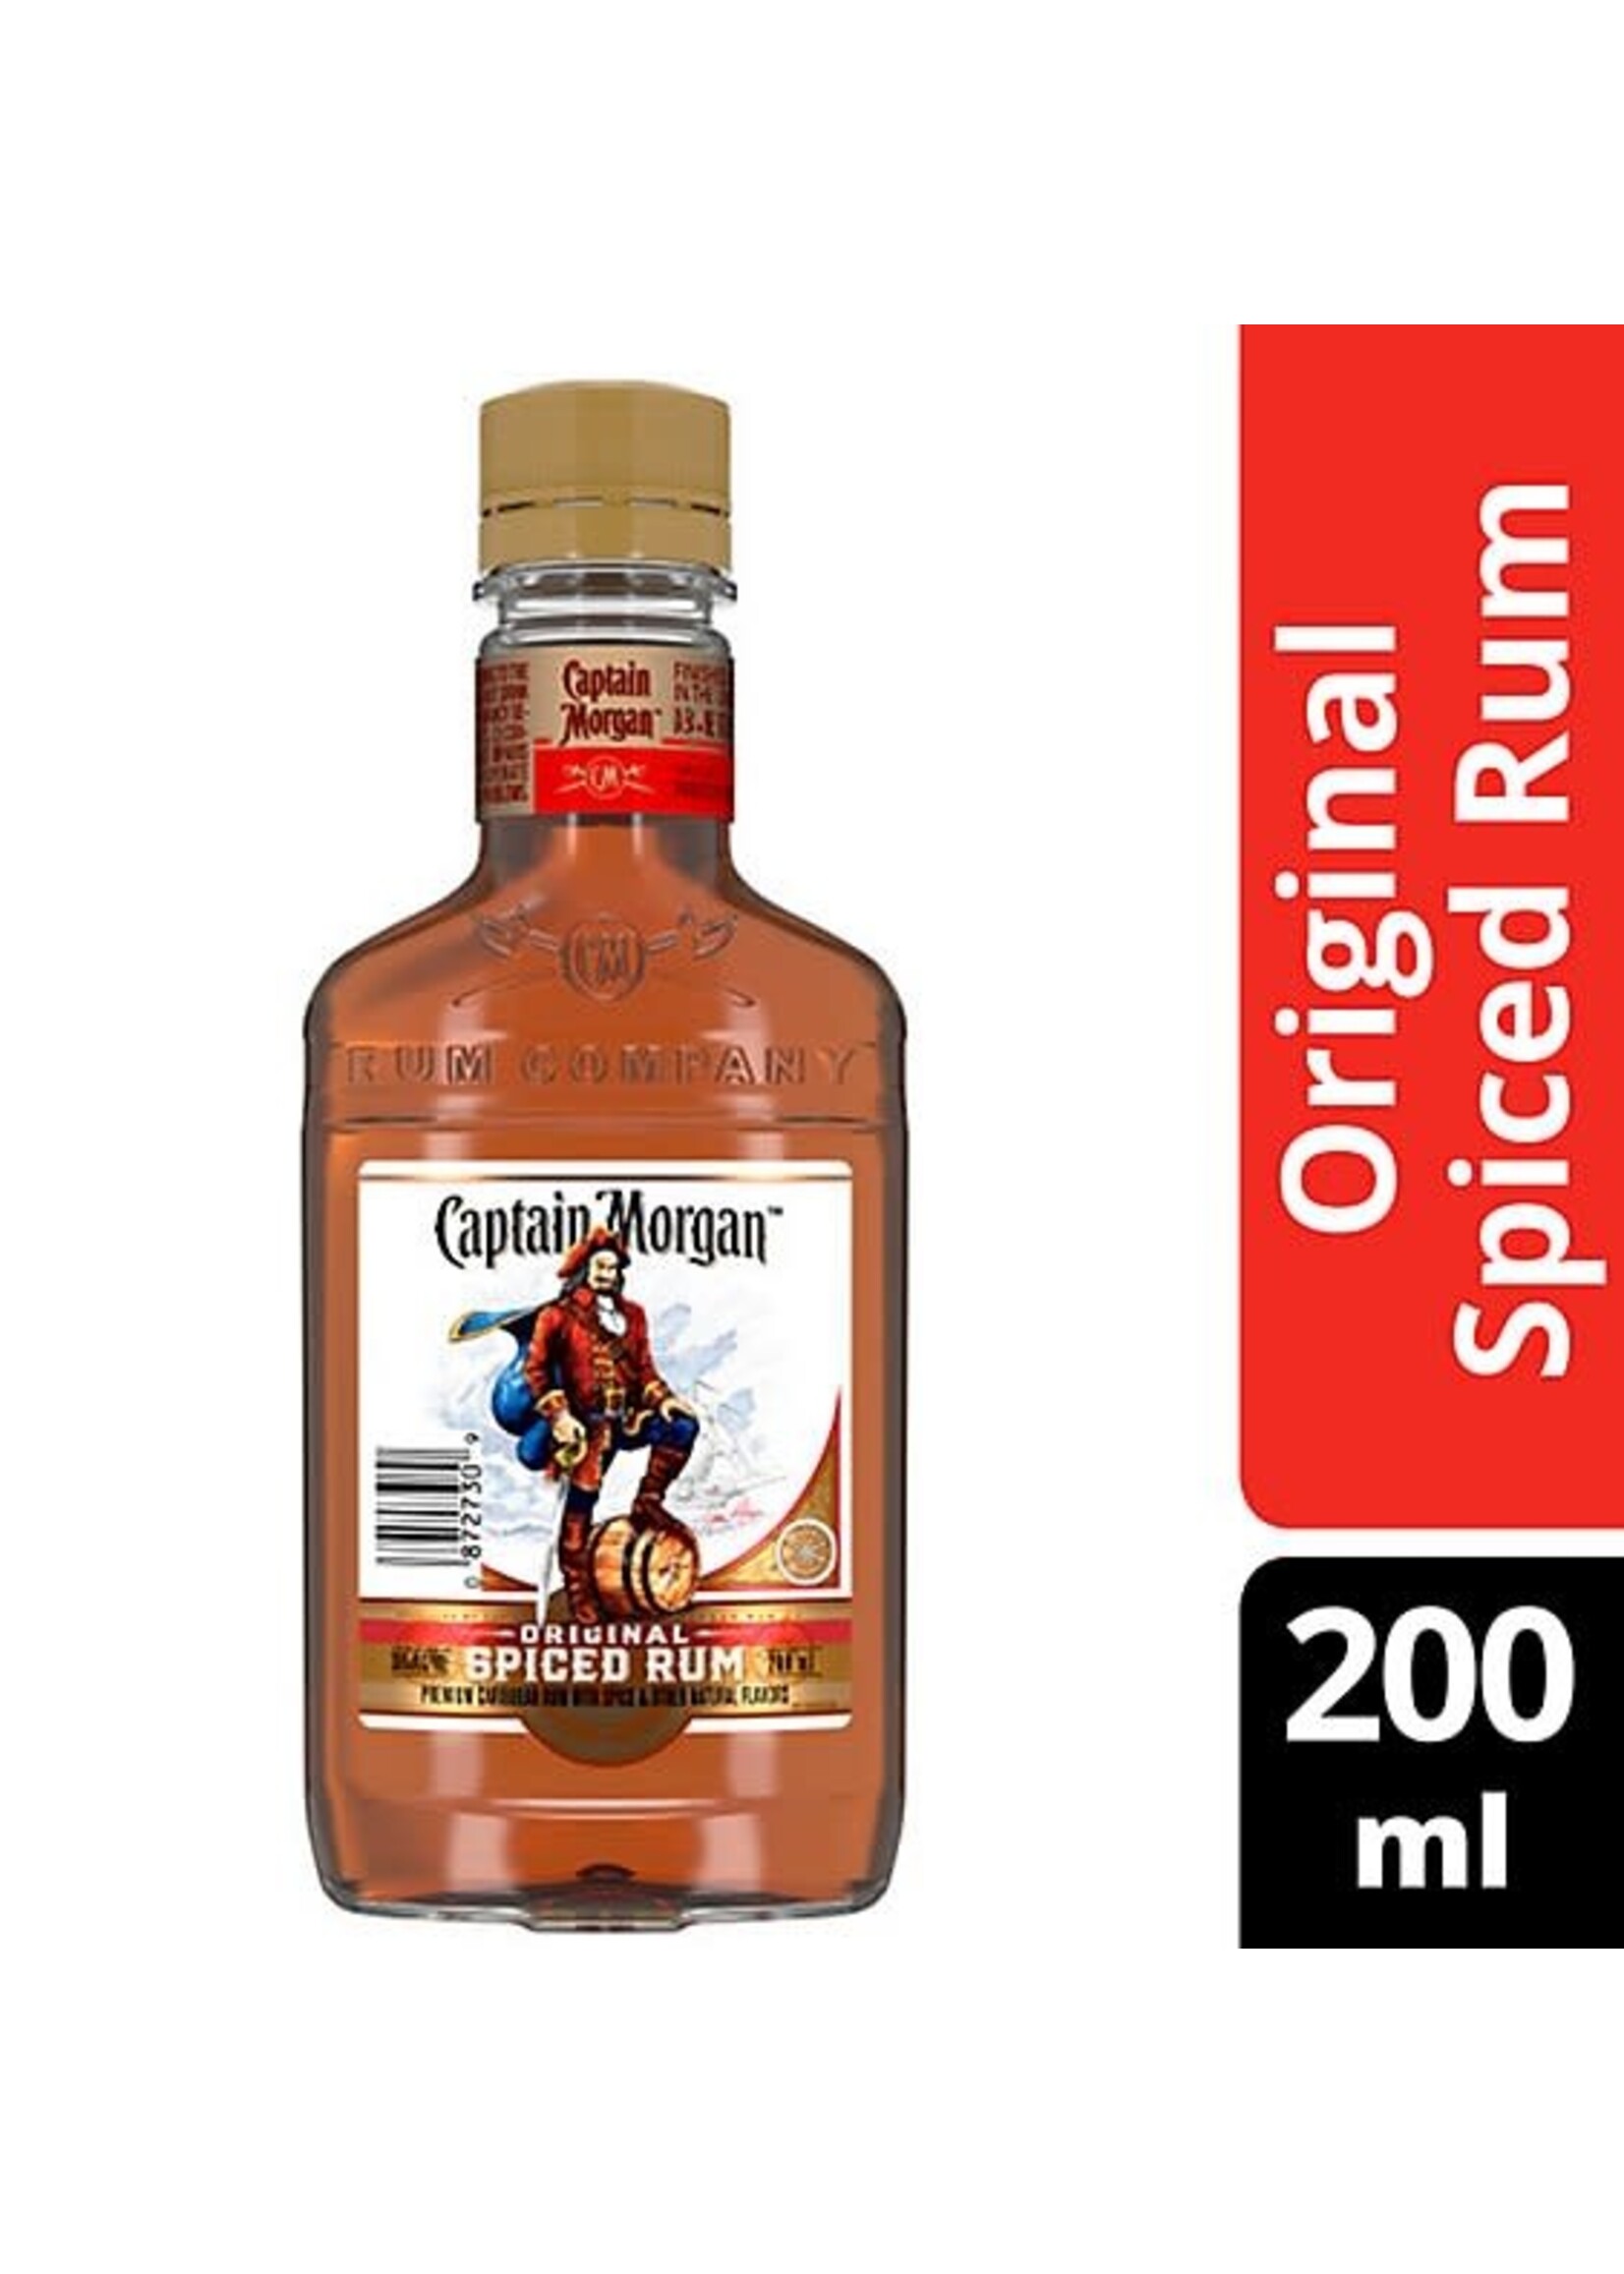 Captain Morgan Original Spiced Rum 70Proof Pet 200ml